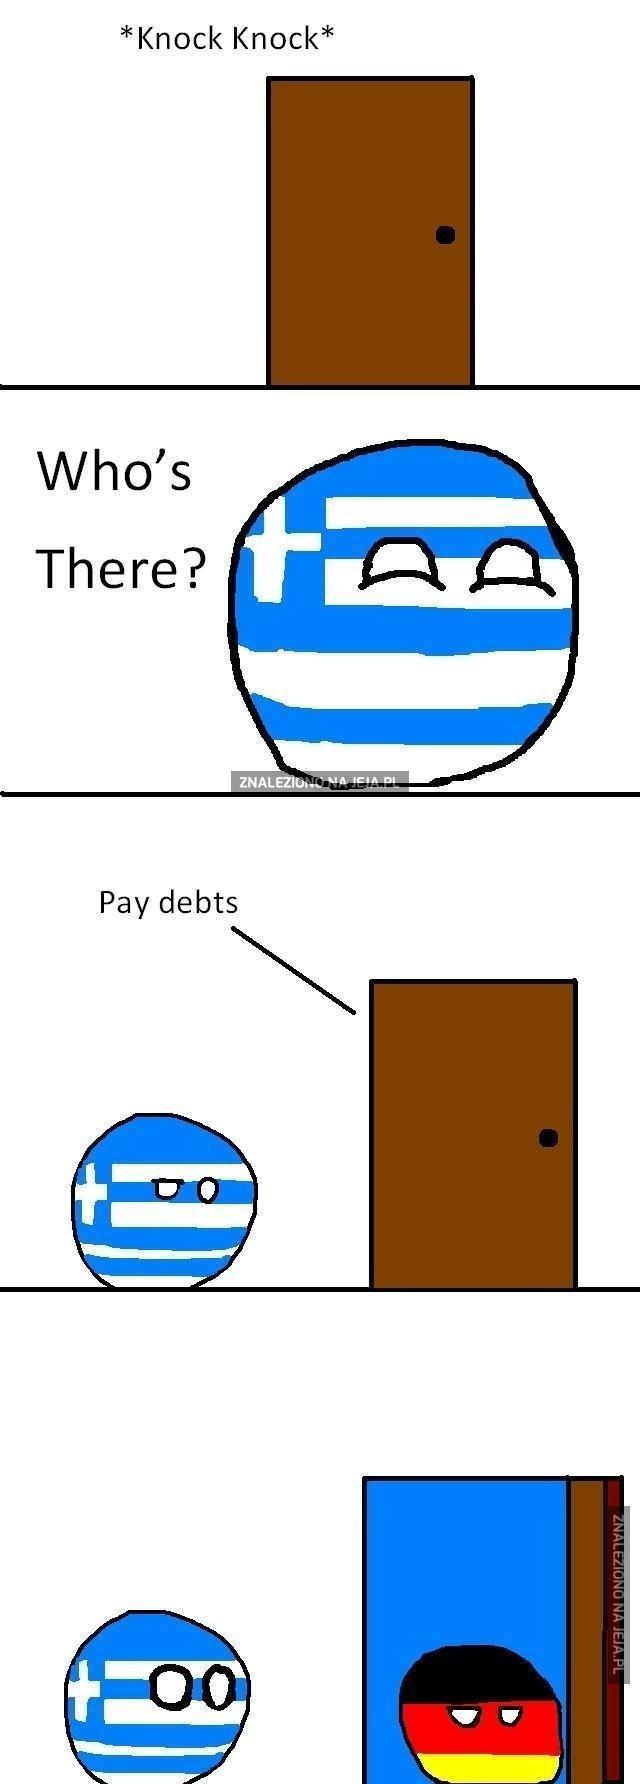 Pay Debts